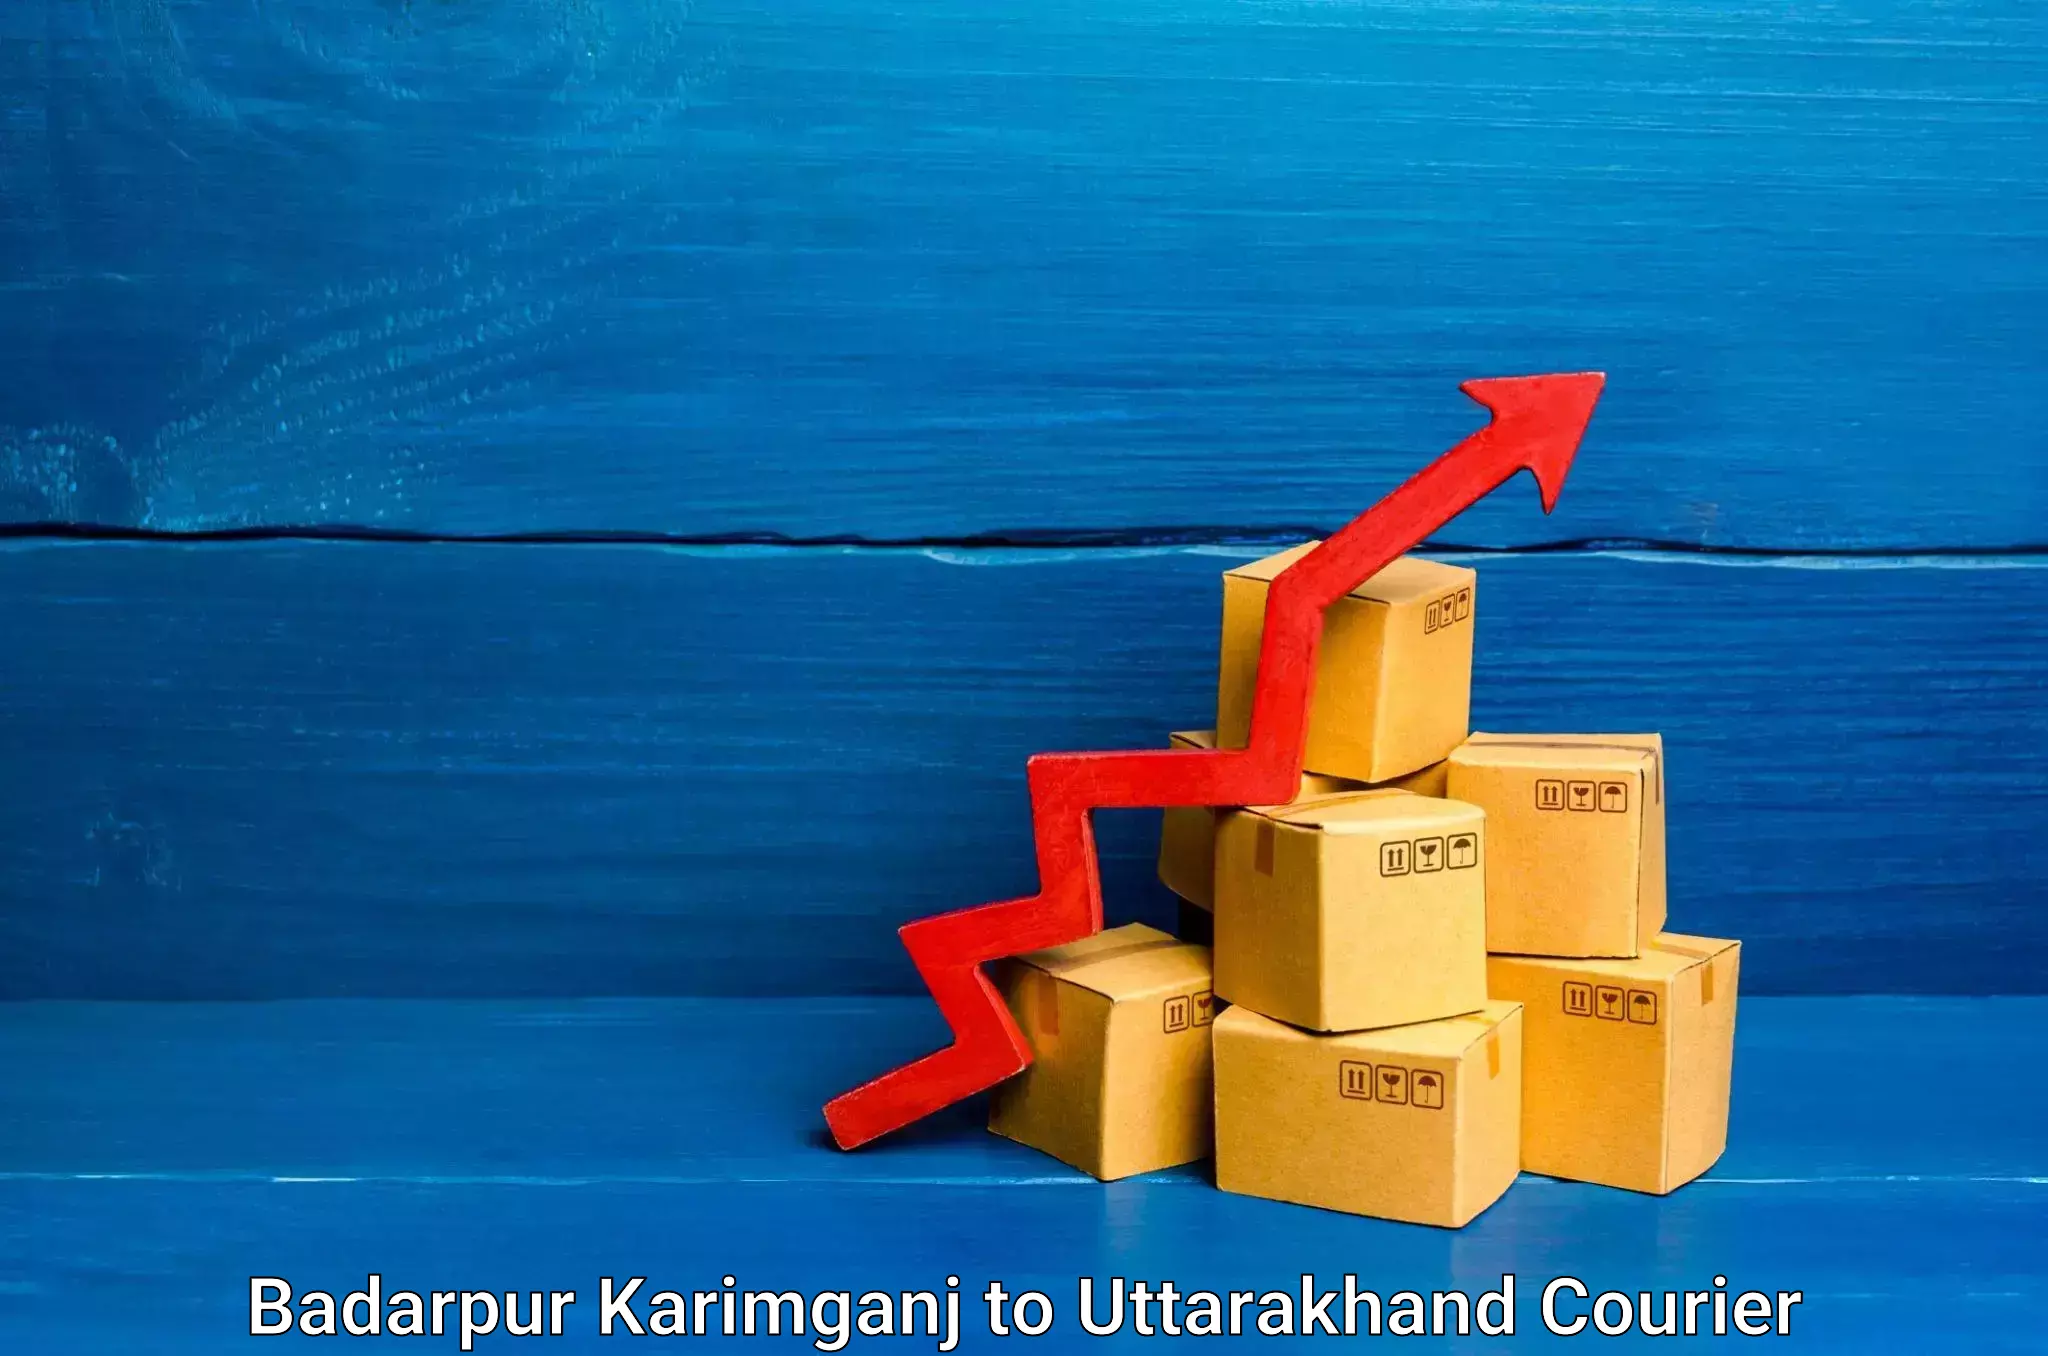 Nationwide delivery network Badarpur Karimganj to Rudrapur